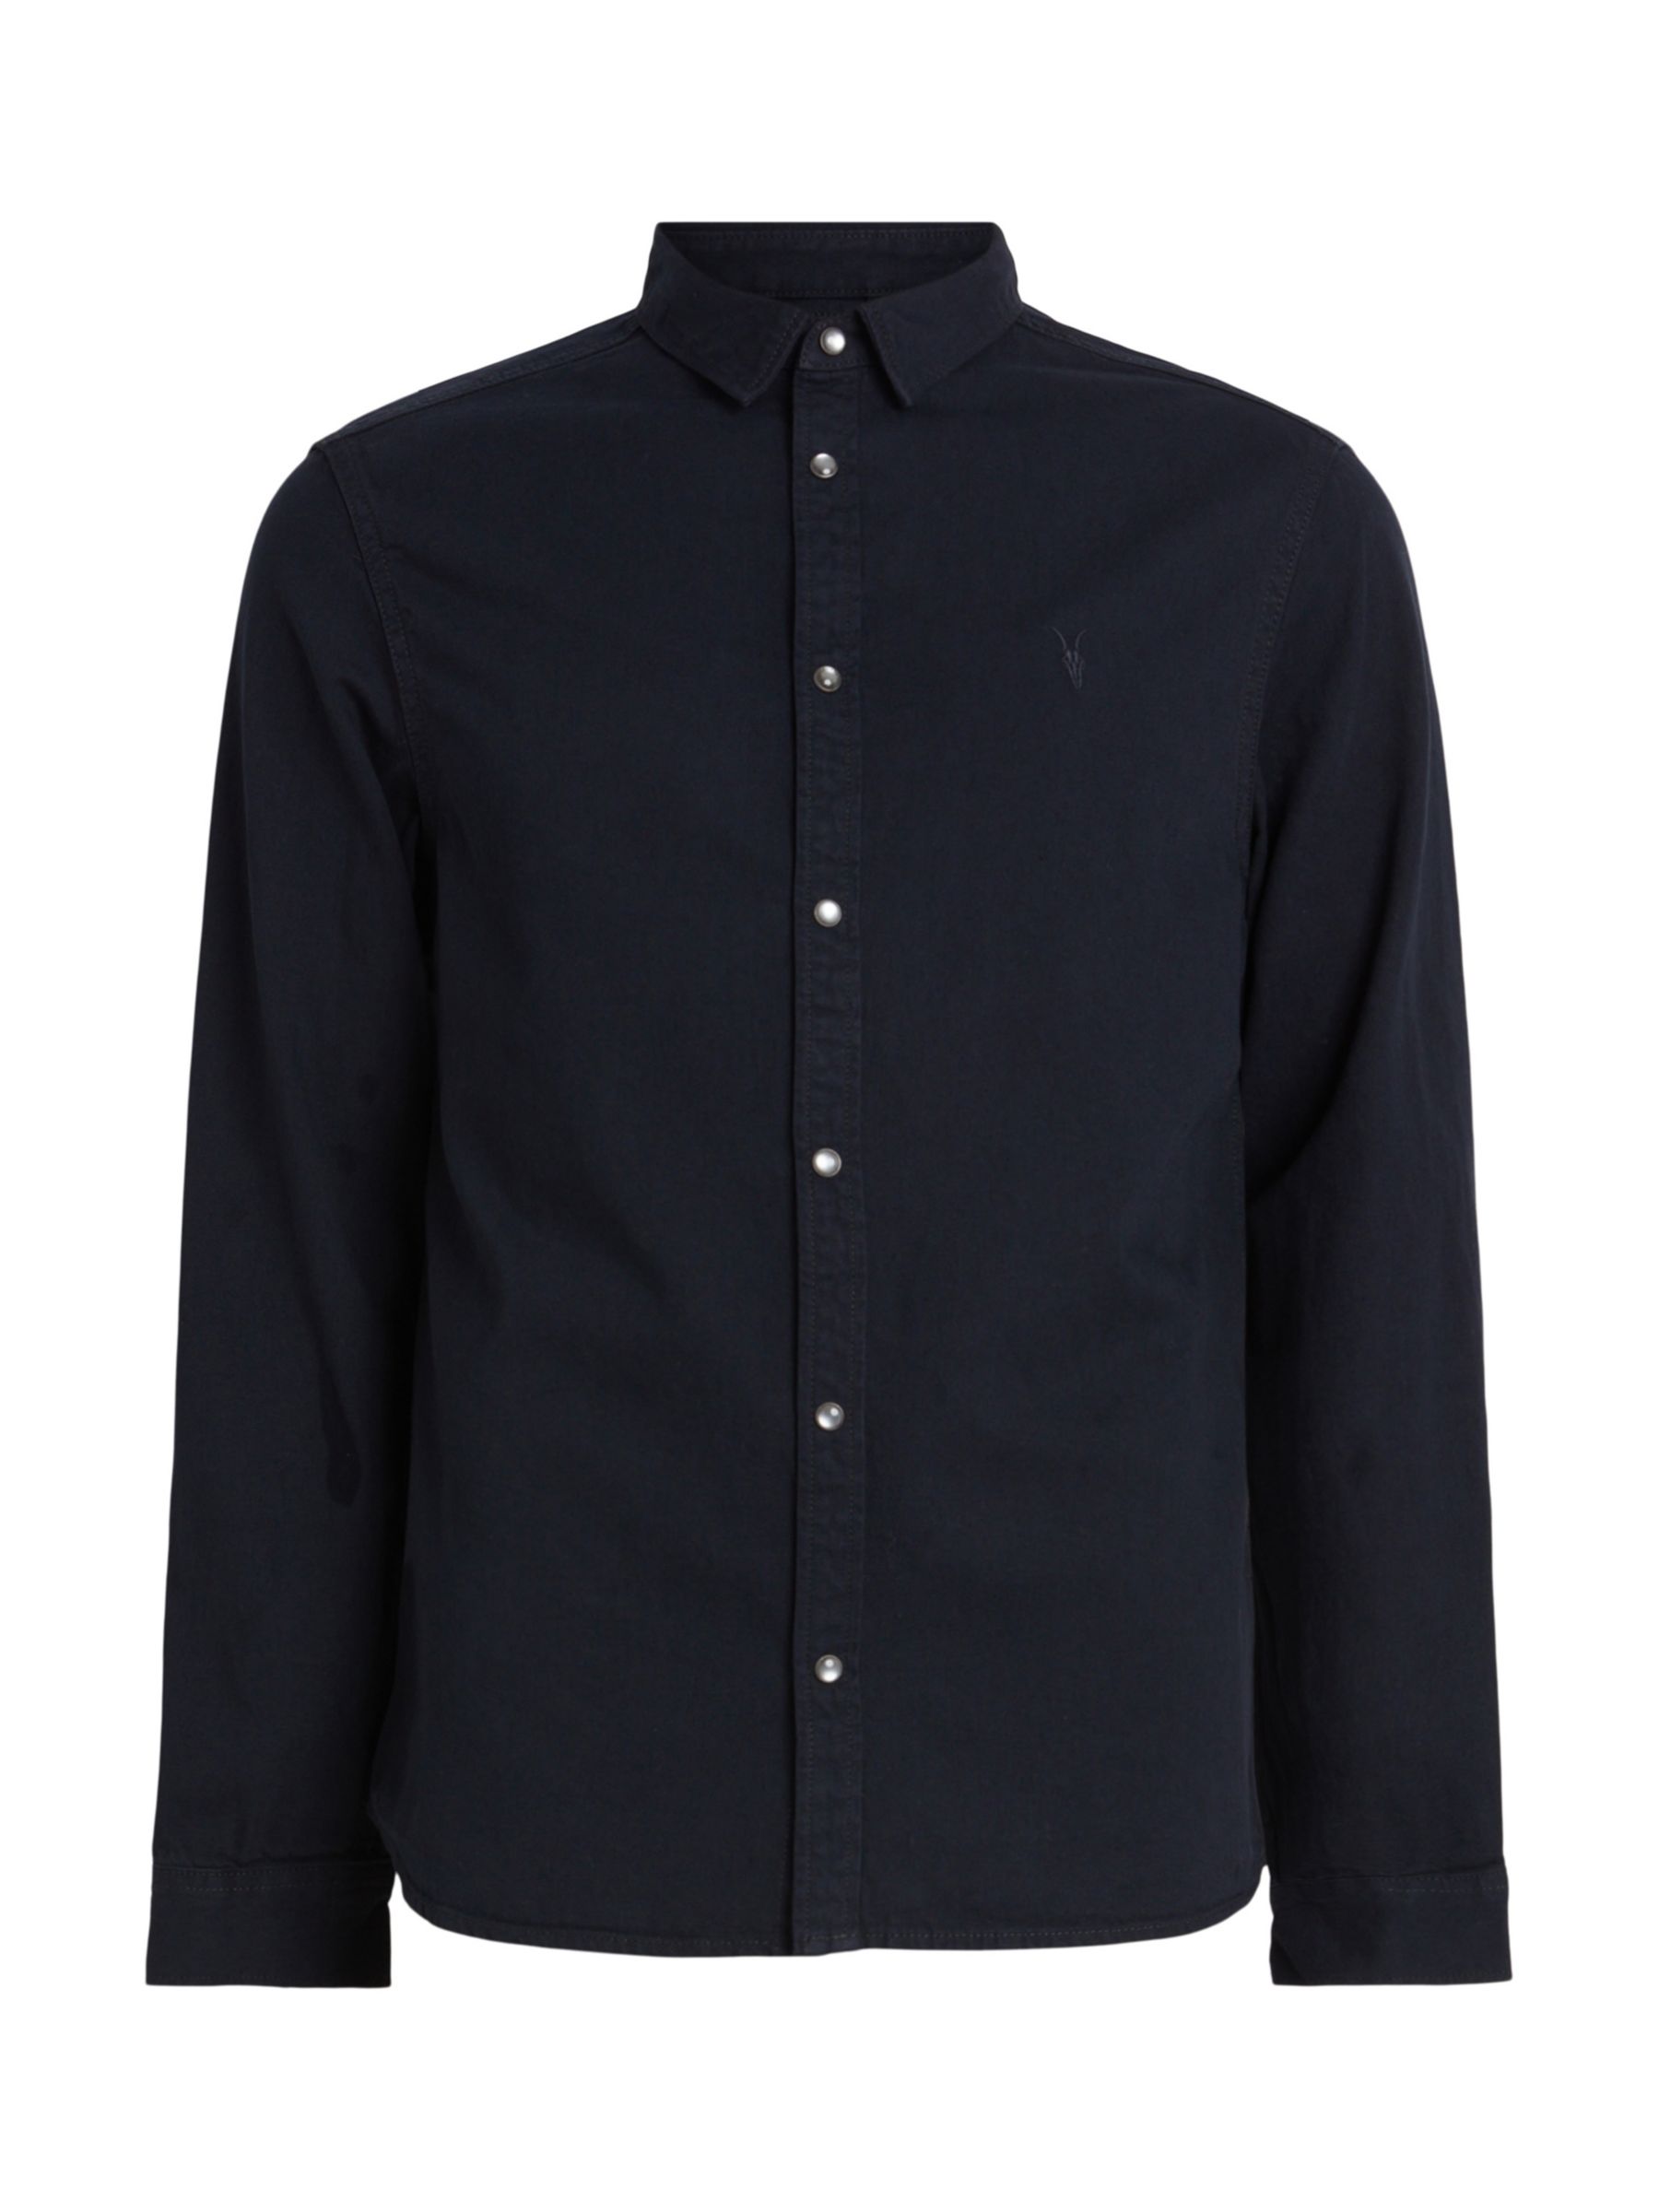 AllSaints Gleason Denim Shirt, Blue/Black at John Lewis & Partners